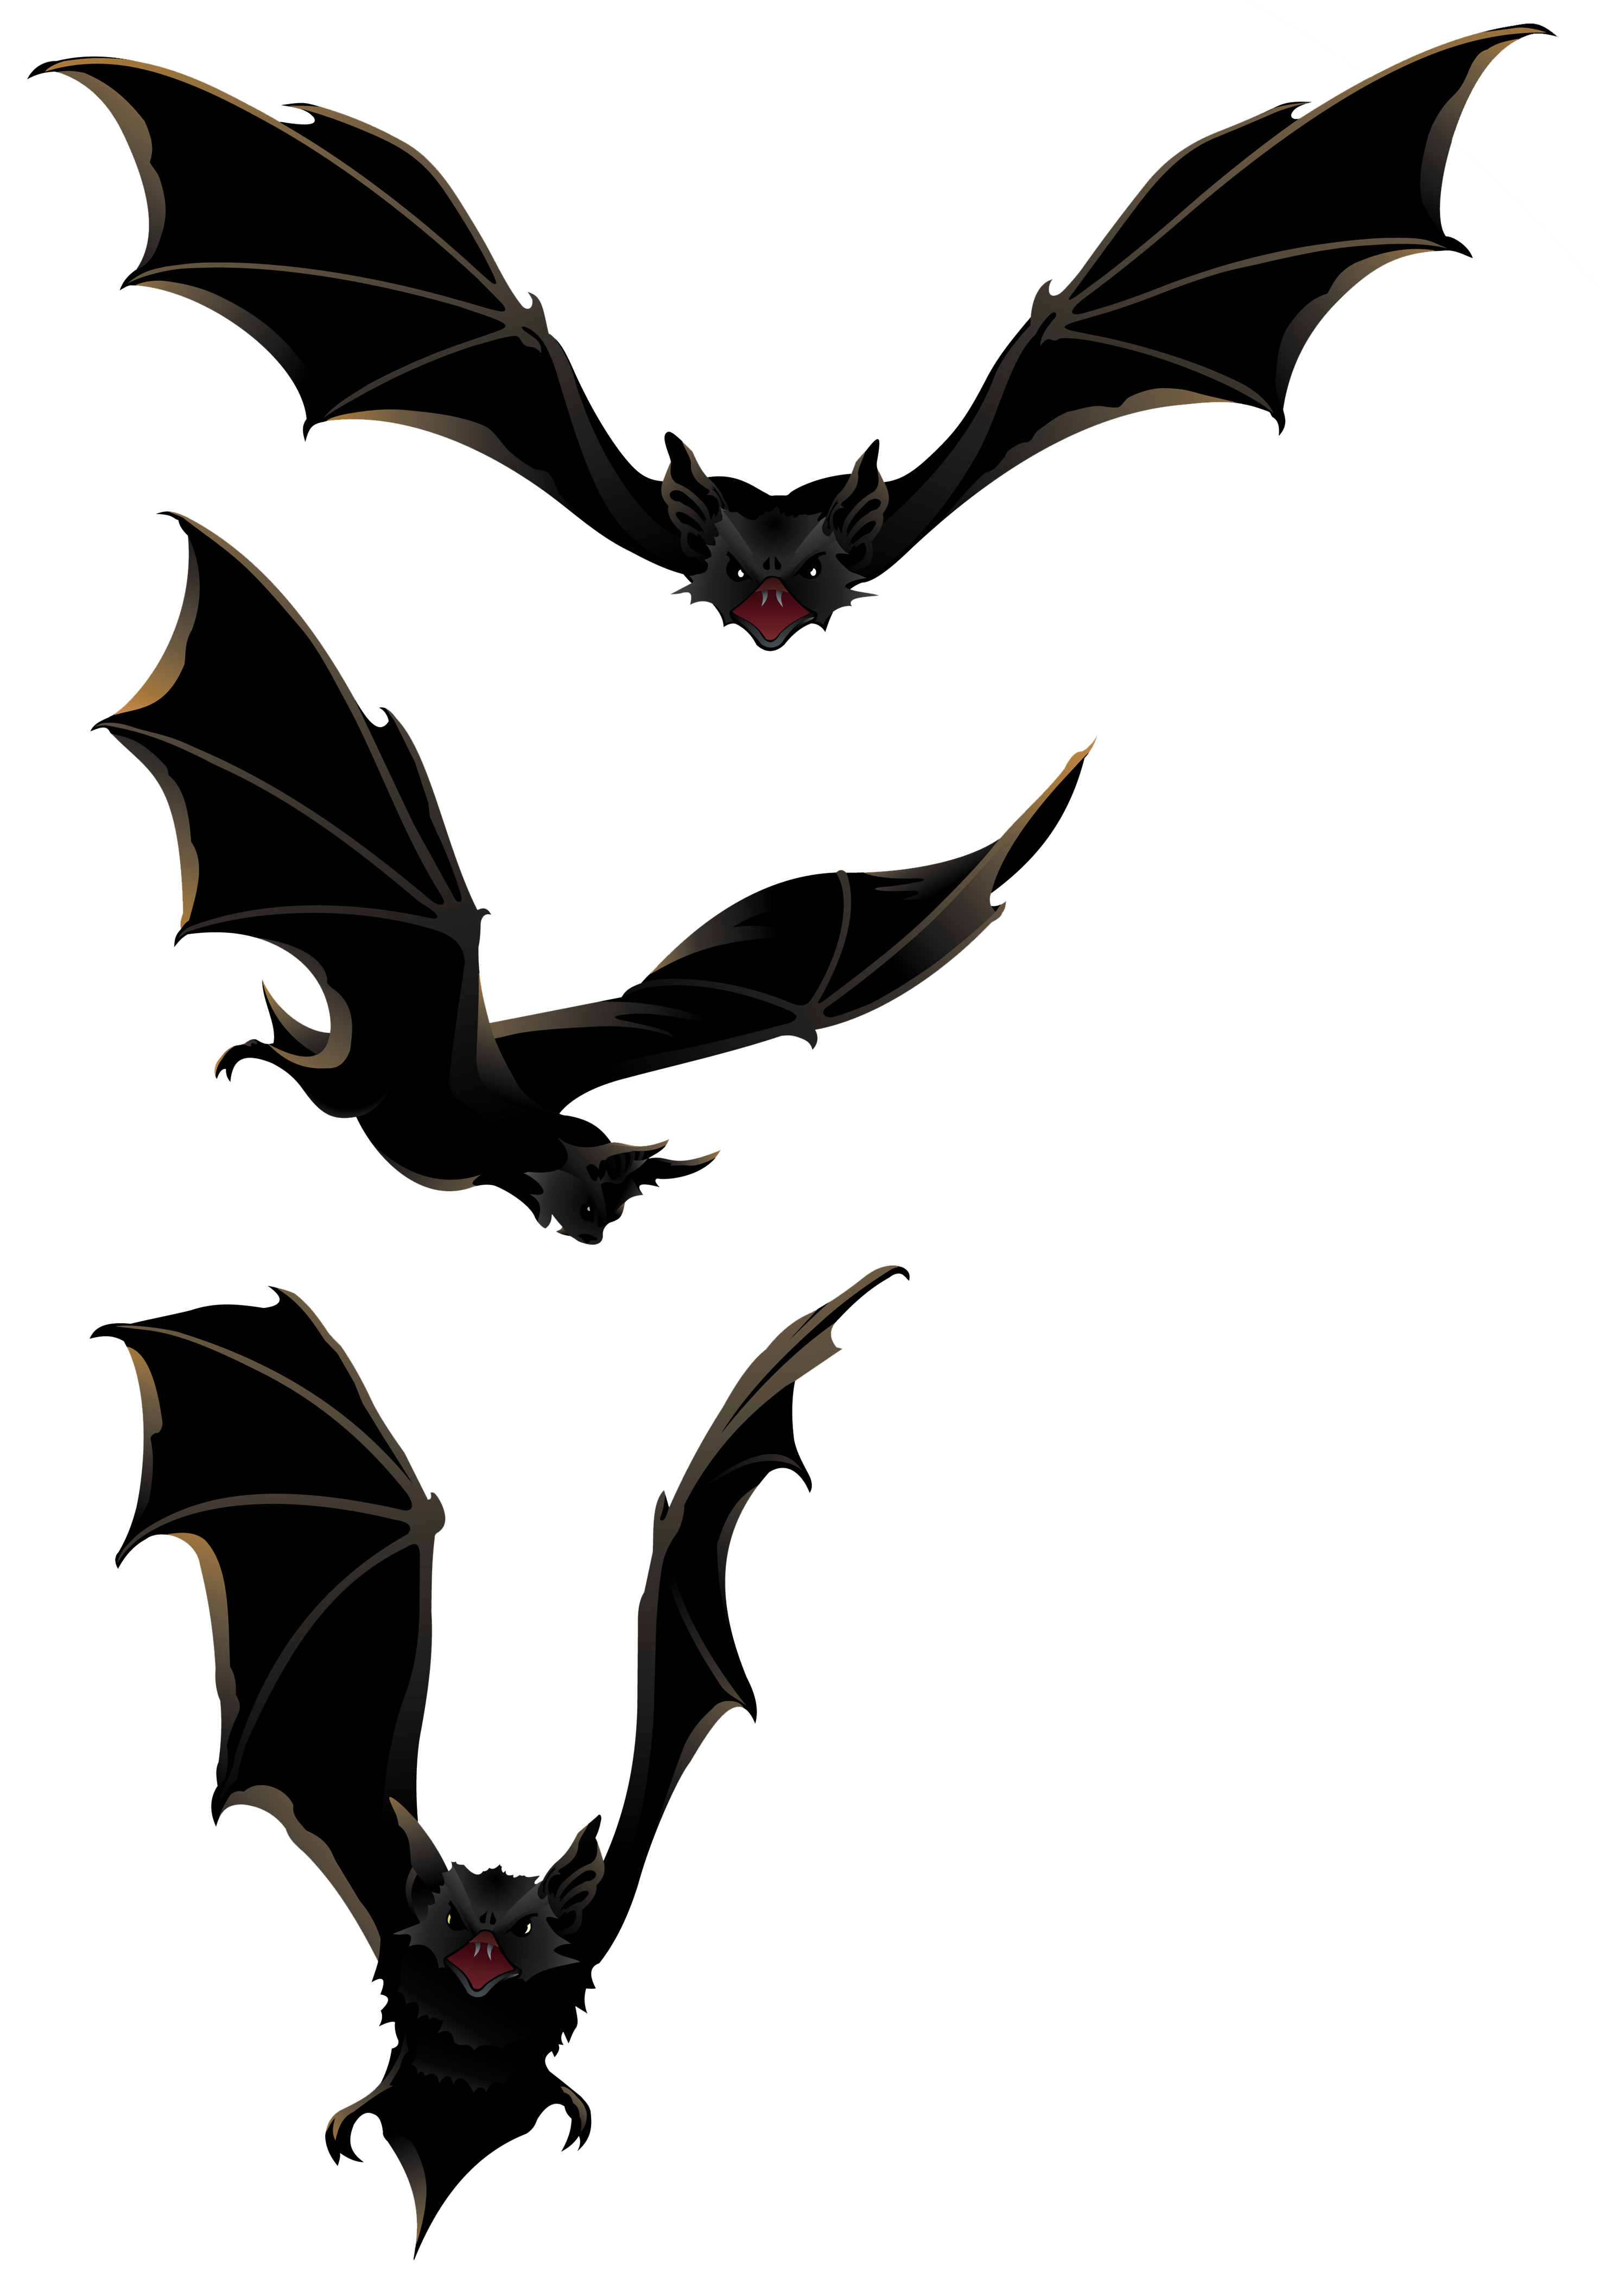 Halloween Black Bat Clipart 